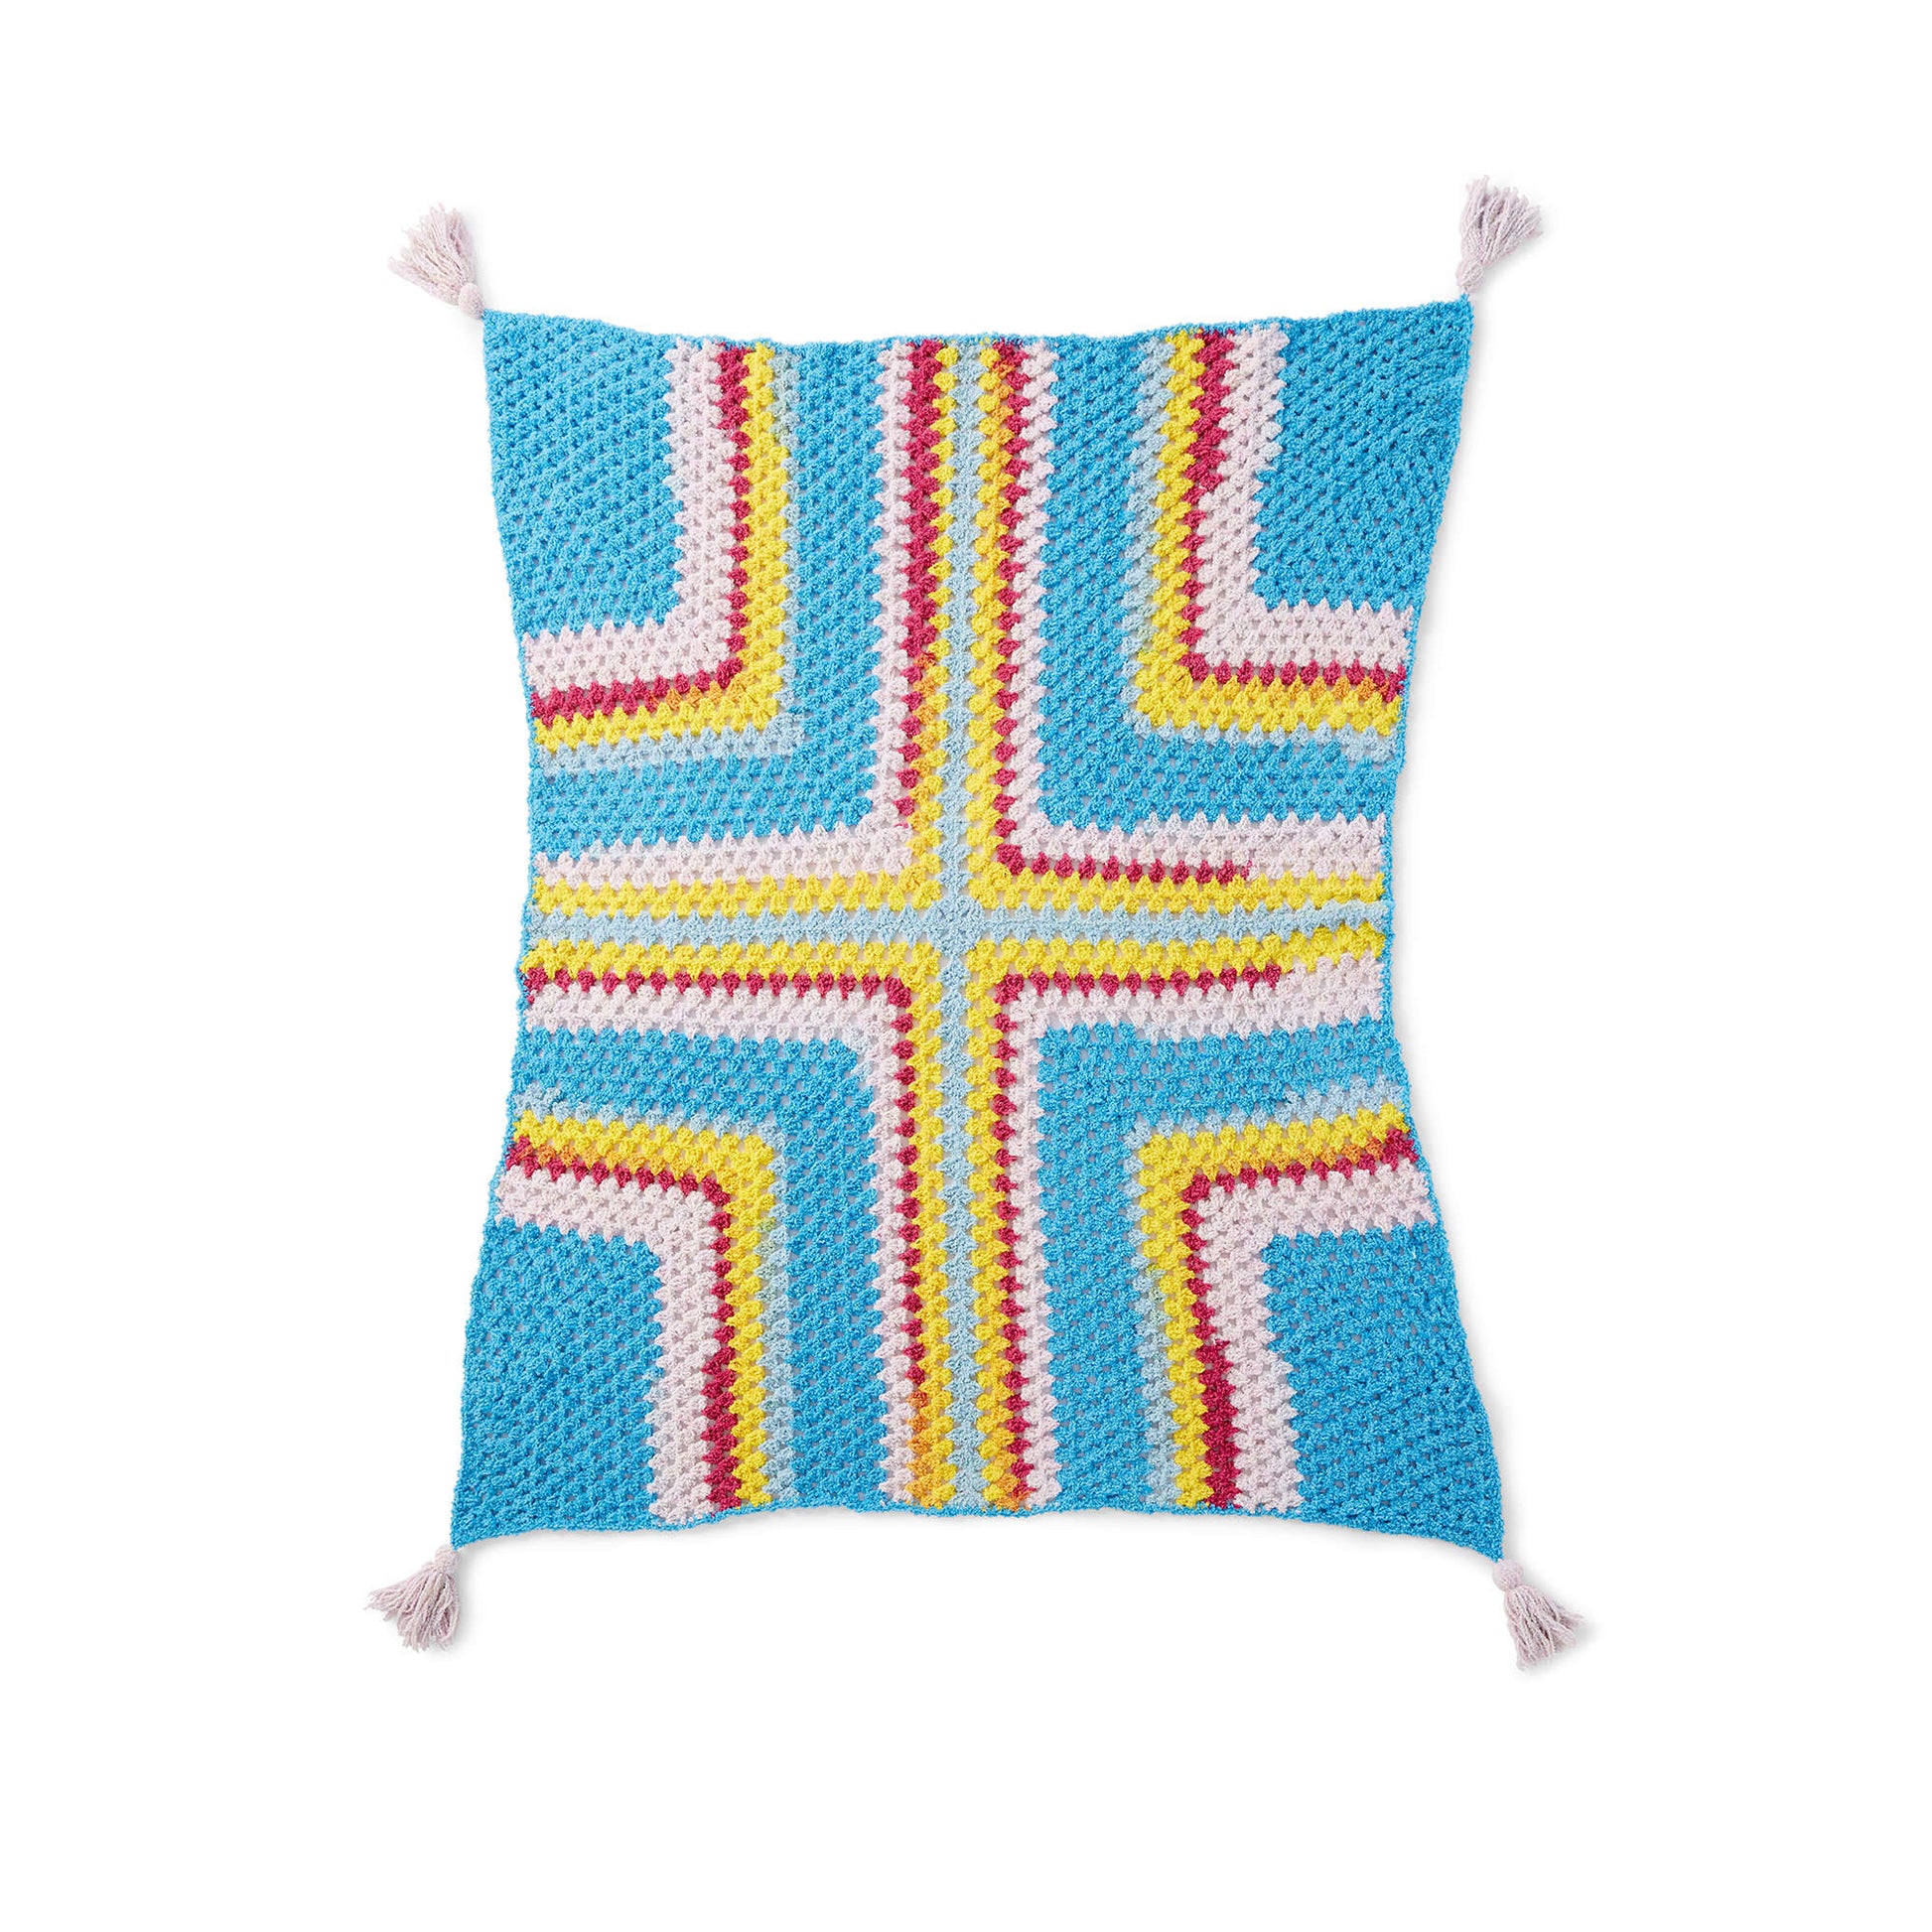 Free Bernat Mitered In The Middle Crochet Blanket Pattern